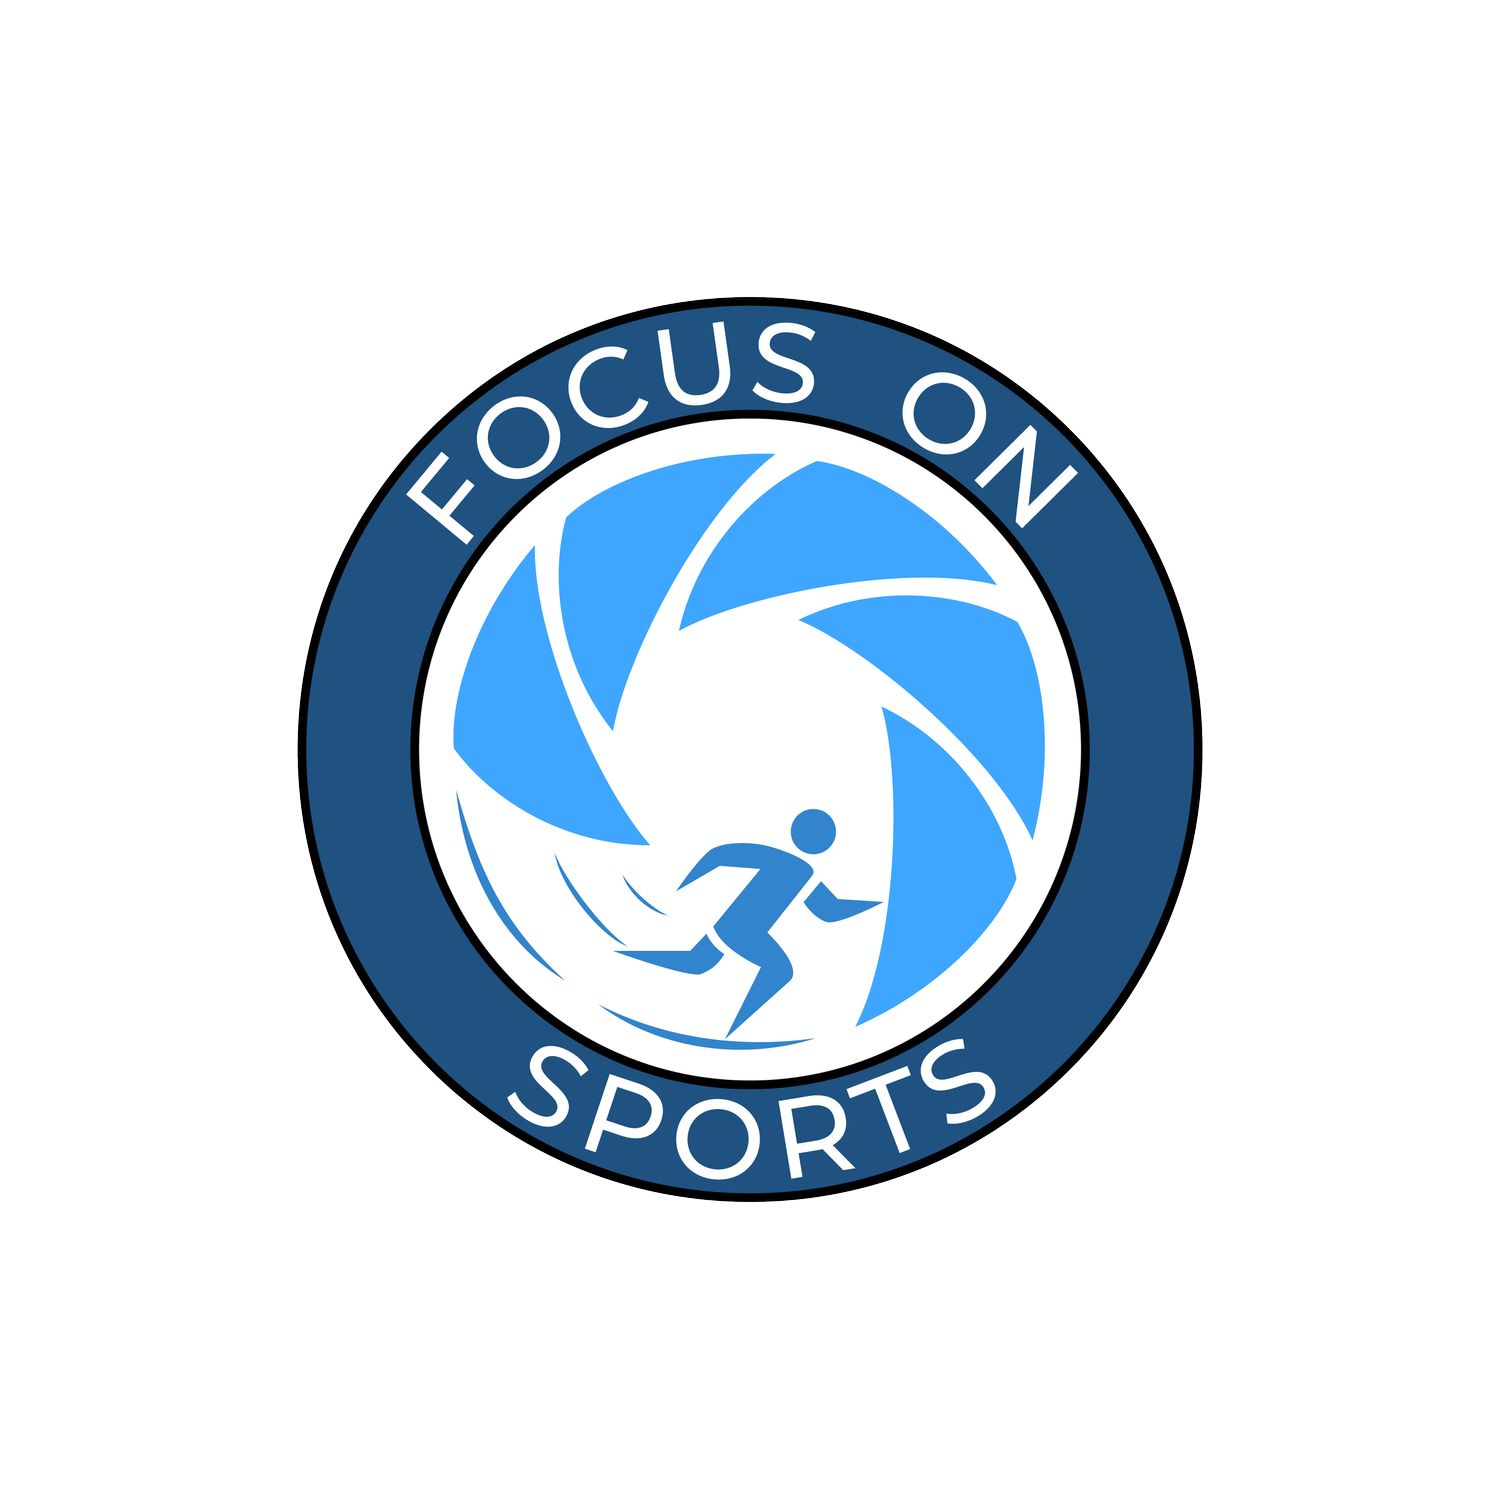 Focus on Sports